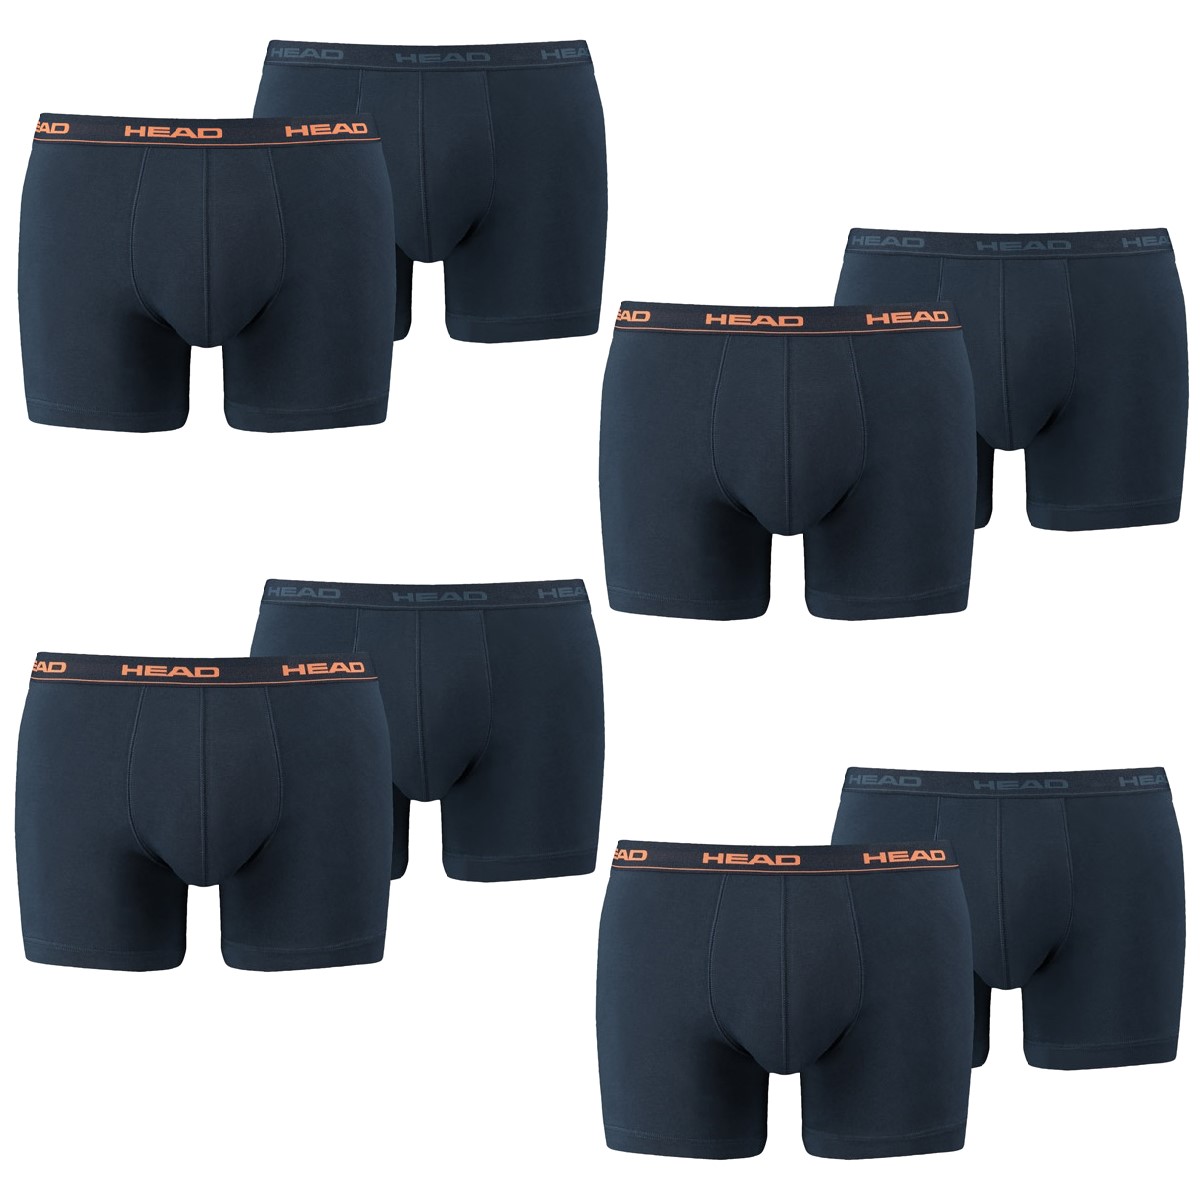 MULTIPACK BOXERS 8 PACK Head Herren Boxer Boxershorts Basic Pant Unterwäsche S, 493 - Peacoat/Orange